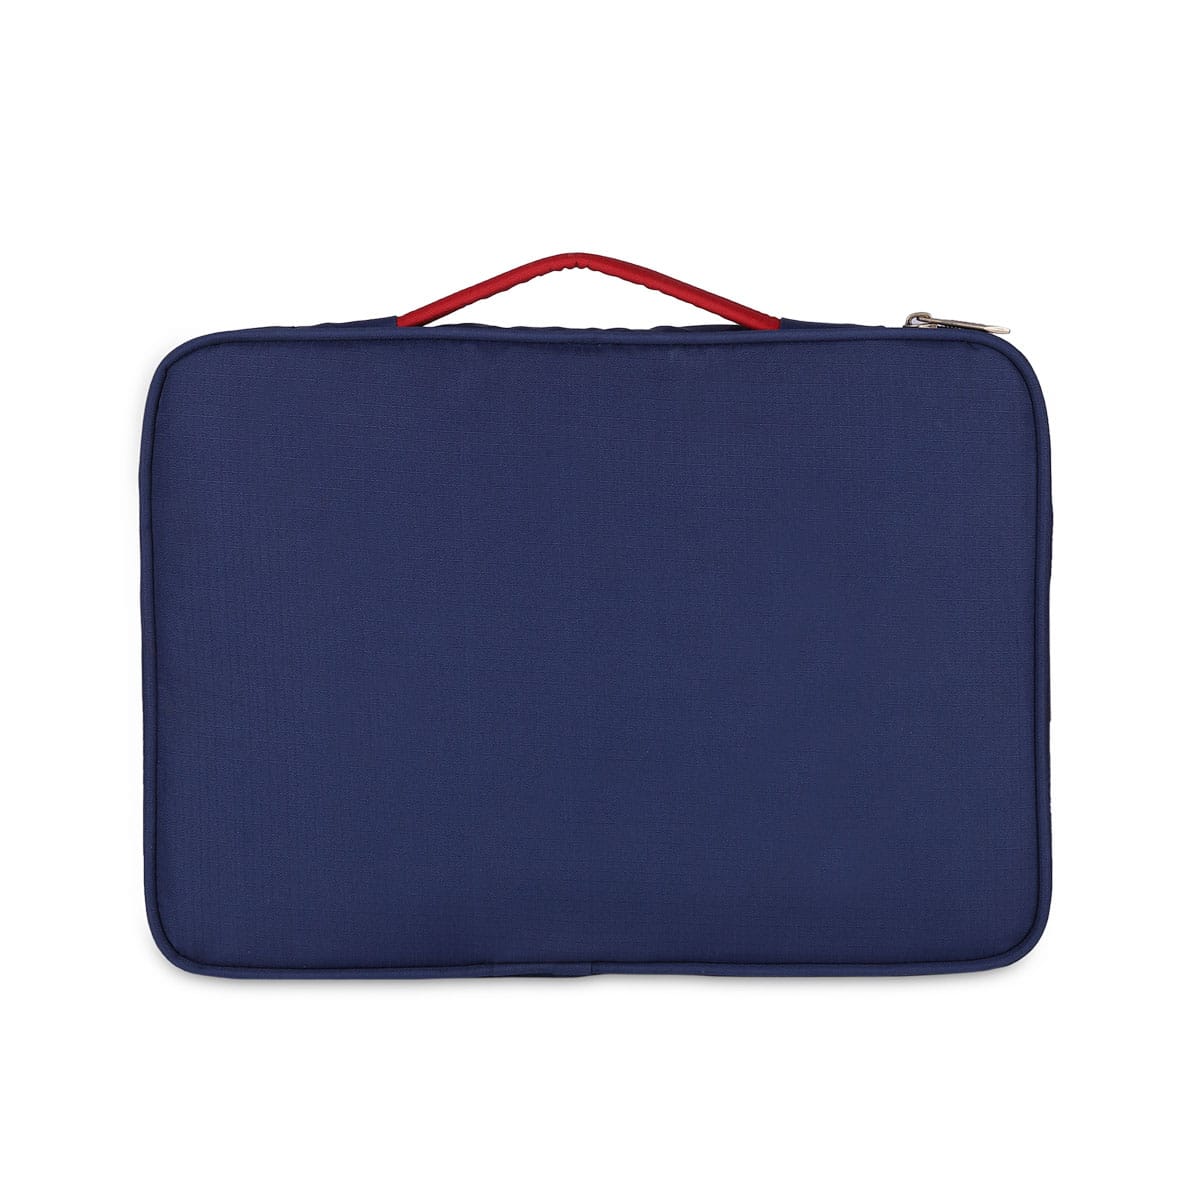 Navy-Red | Protecta Split Personality MacBook Sleeve-3